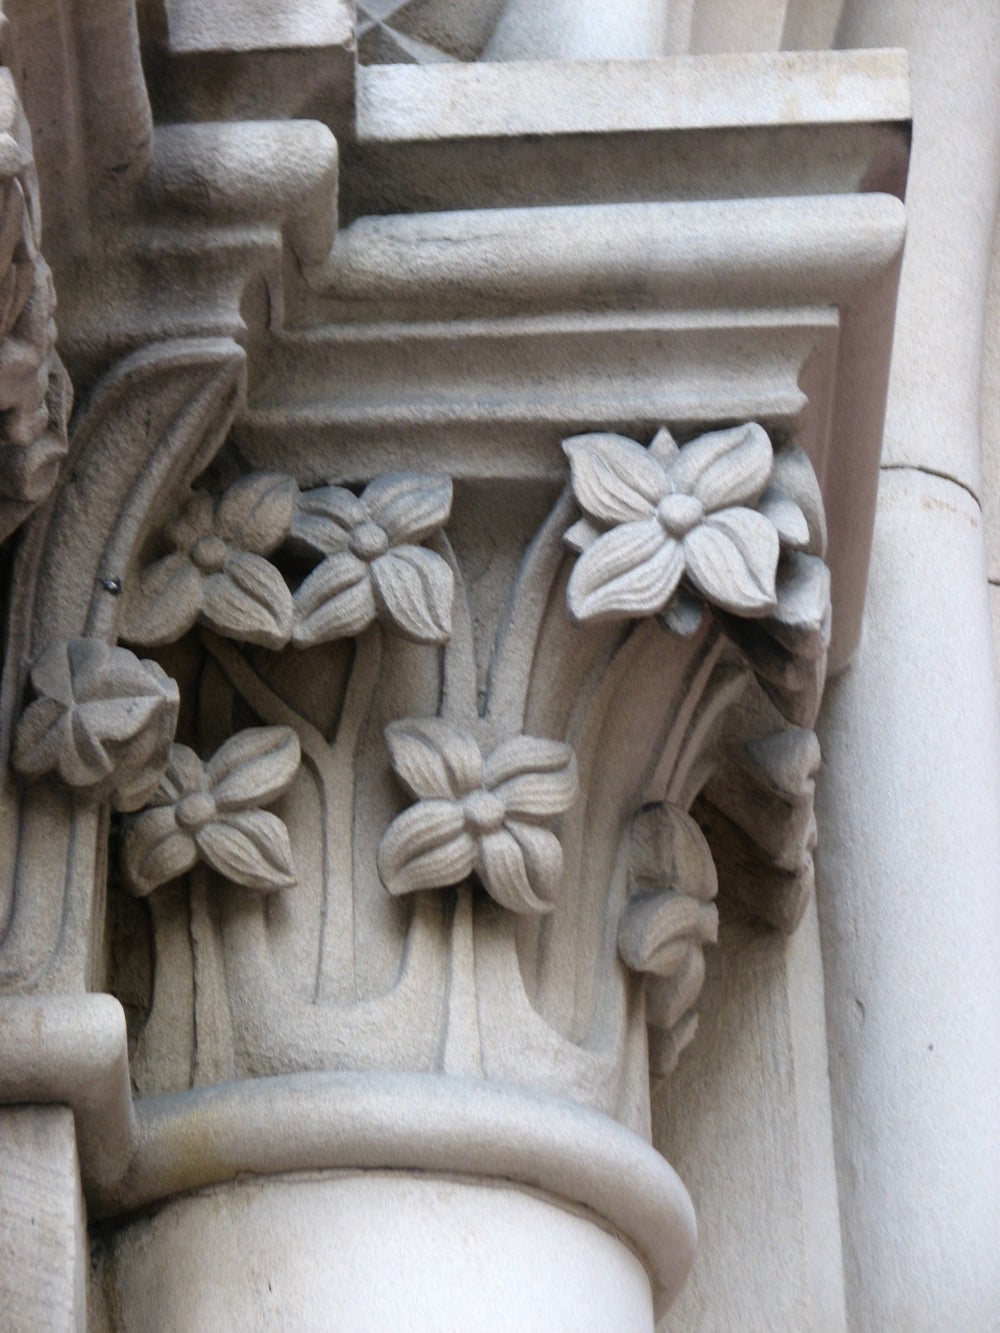 Flower bloom on the church's columns.